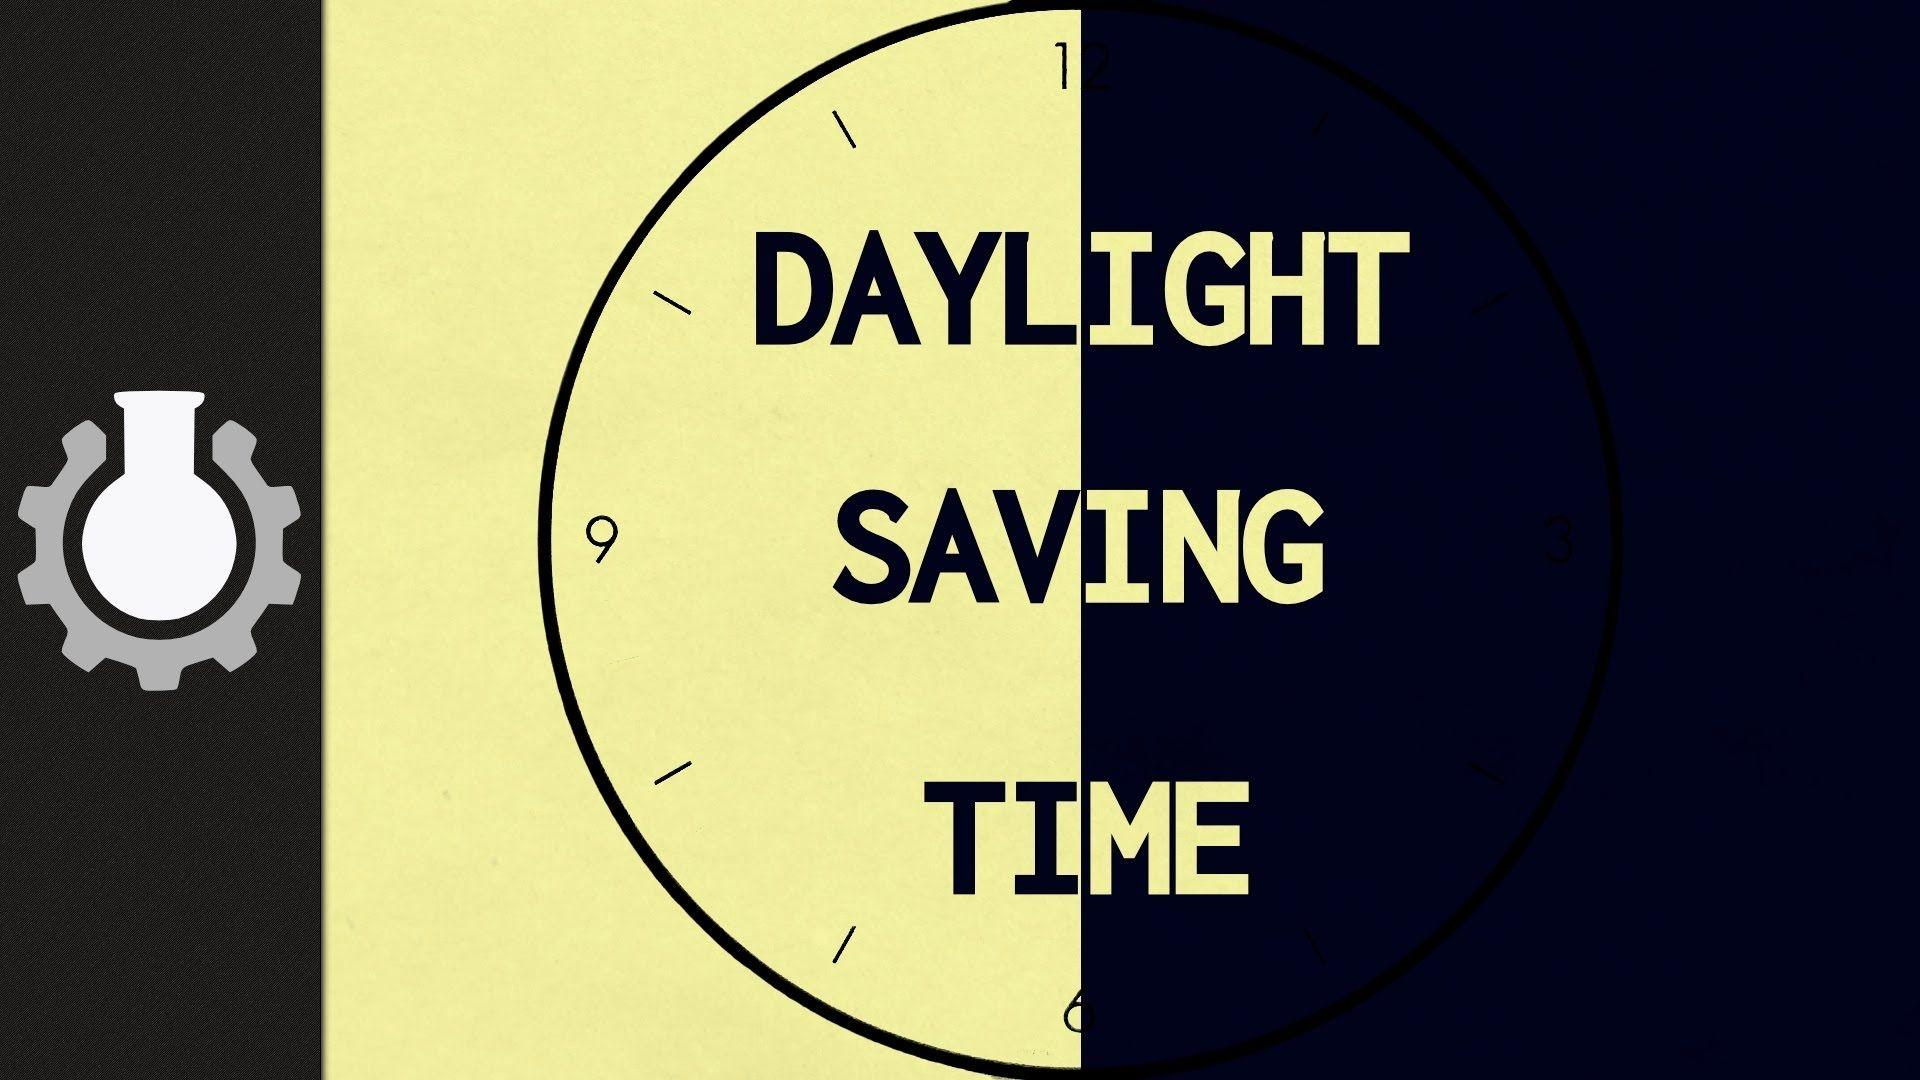 PDM to reinstate Daylight Savings Time